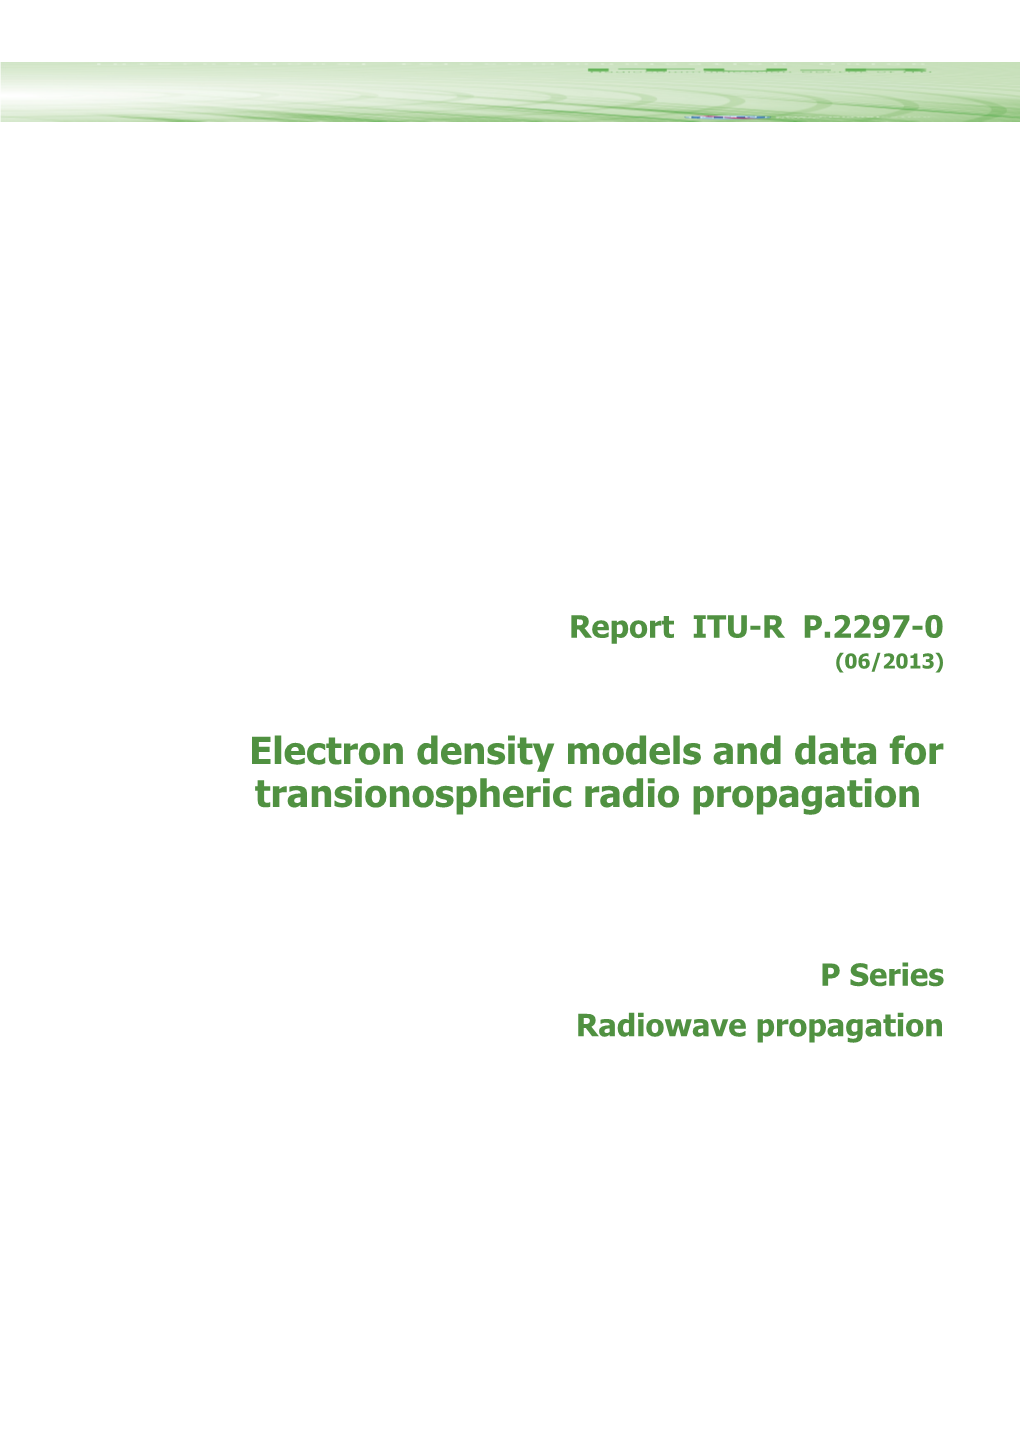 Electron Density Models and Data for Transionospheric Radio